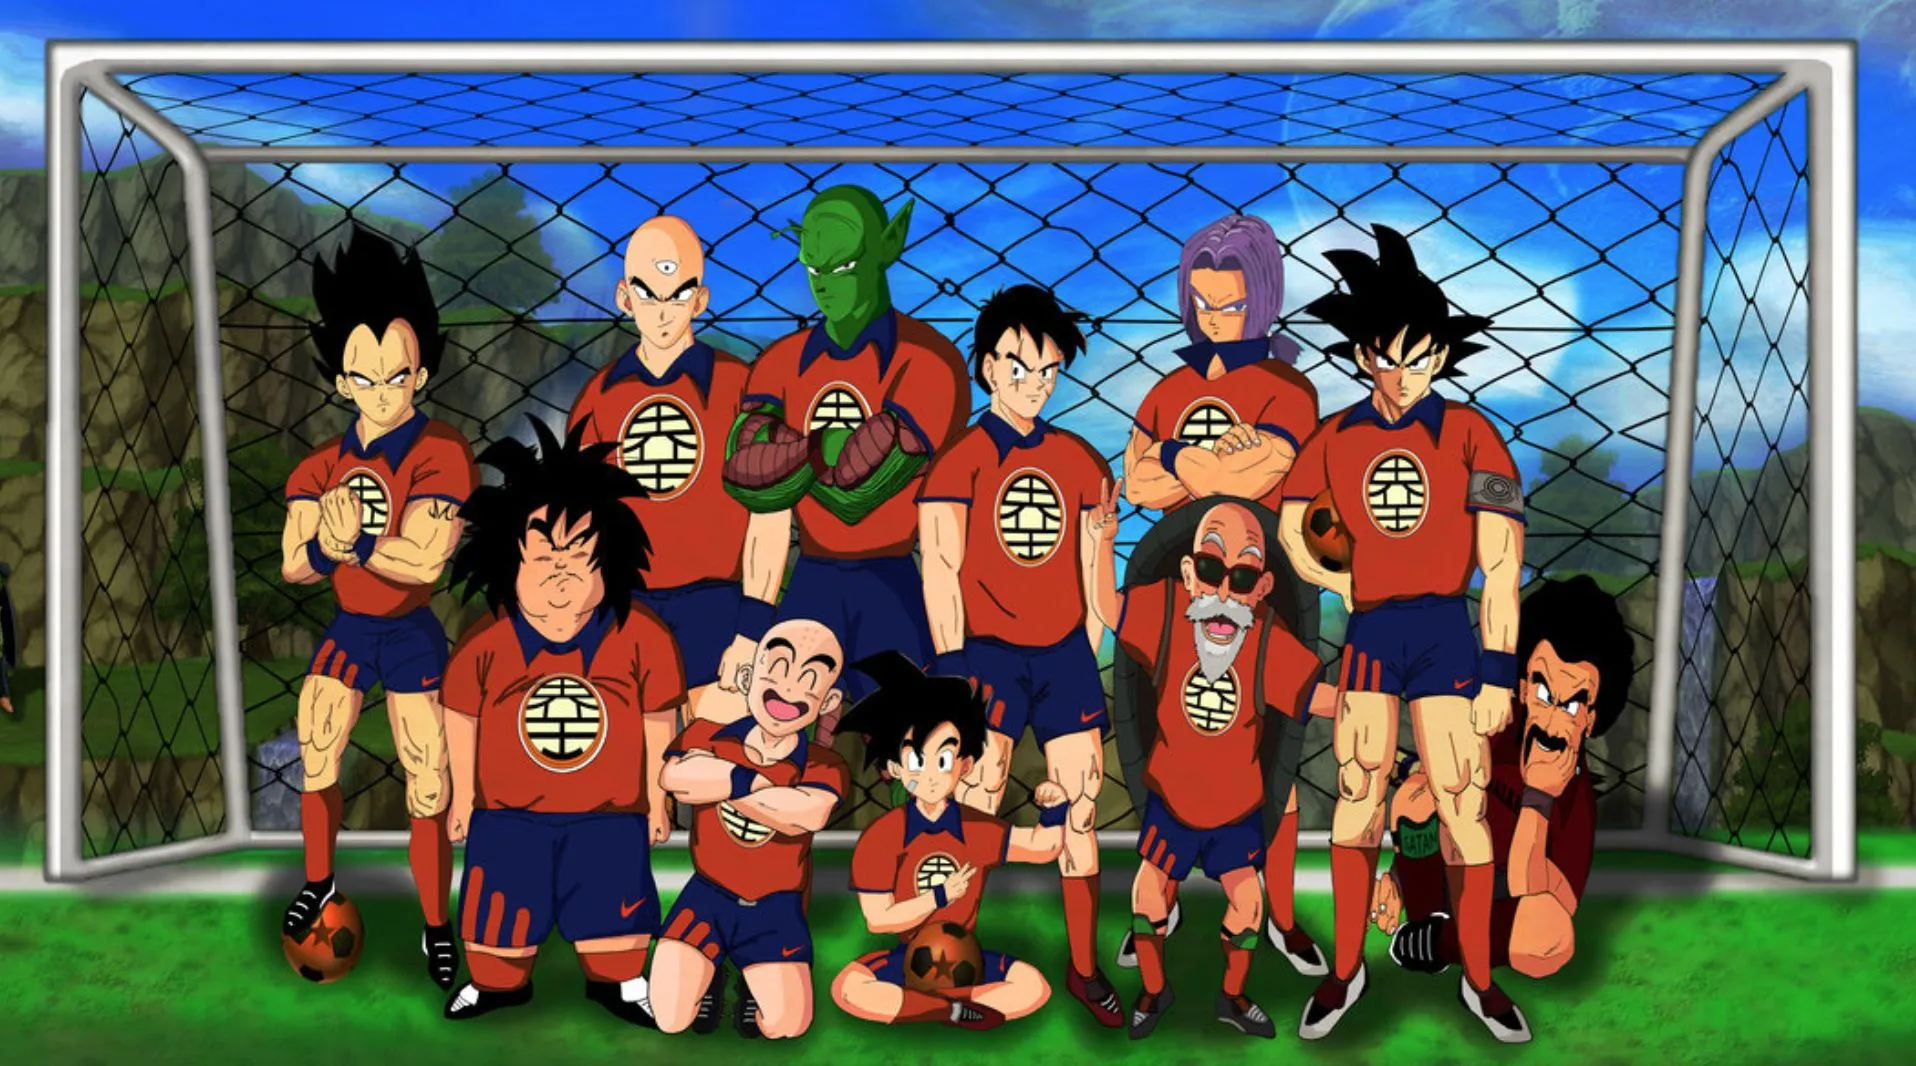 L’équipe type manga